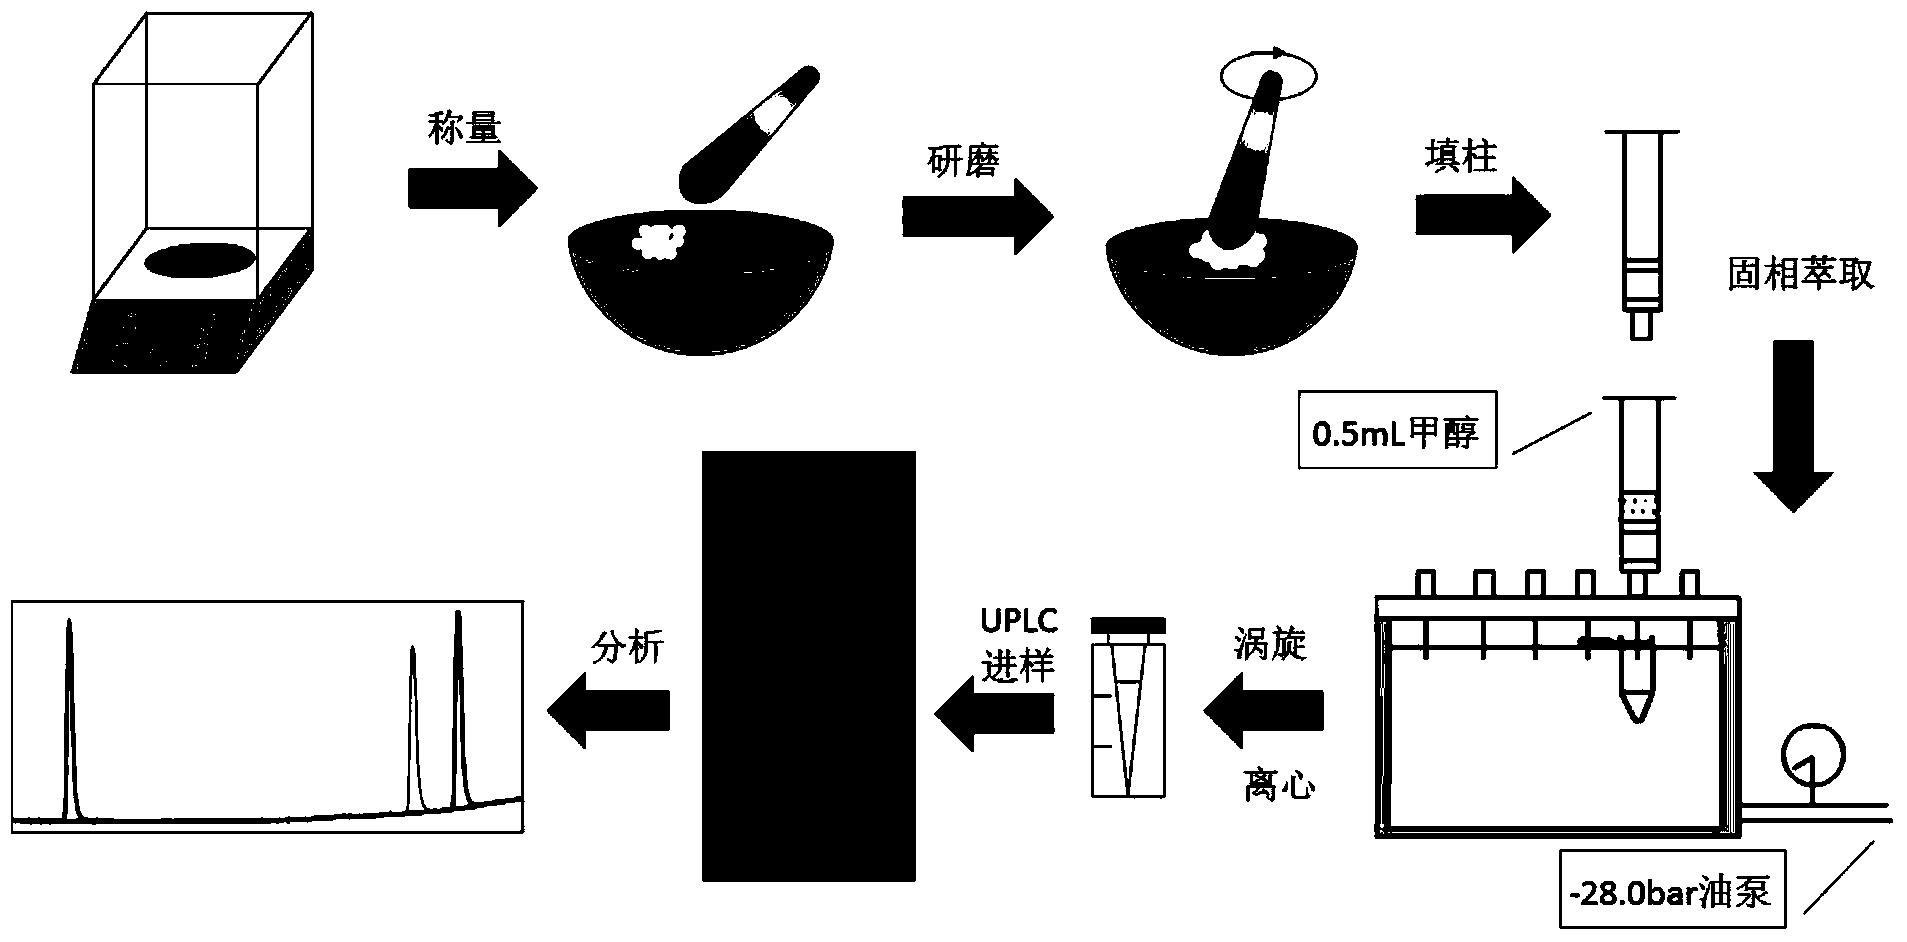 Method for extracting effective flavonoid components in traditional Chinese medicine pericarpium citri reticulatae